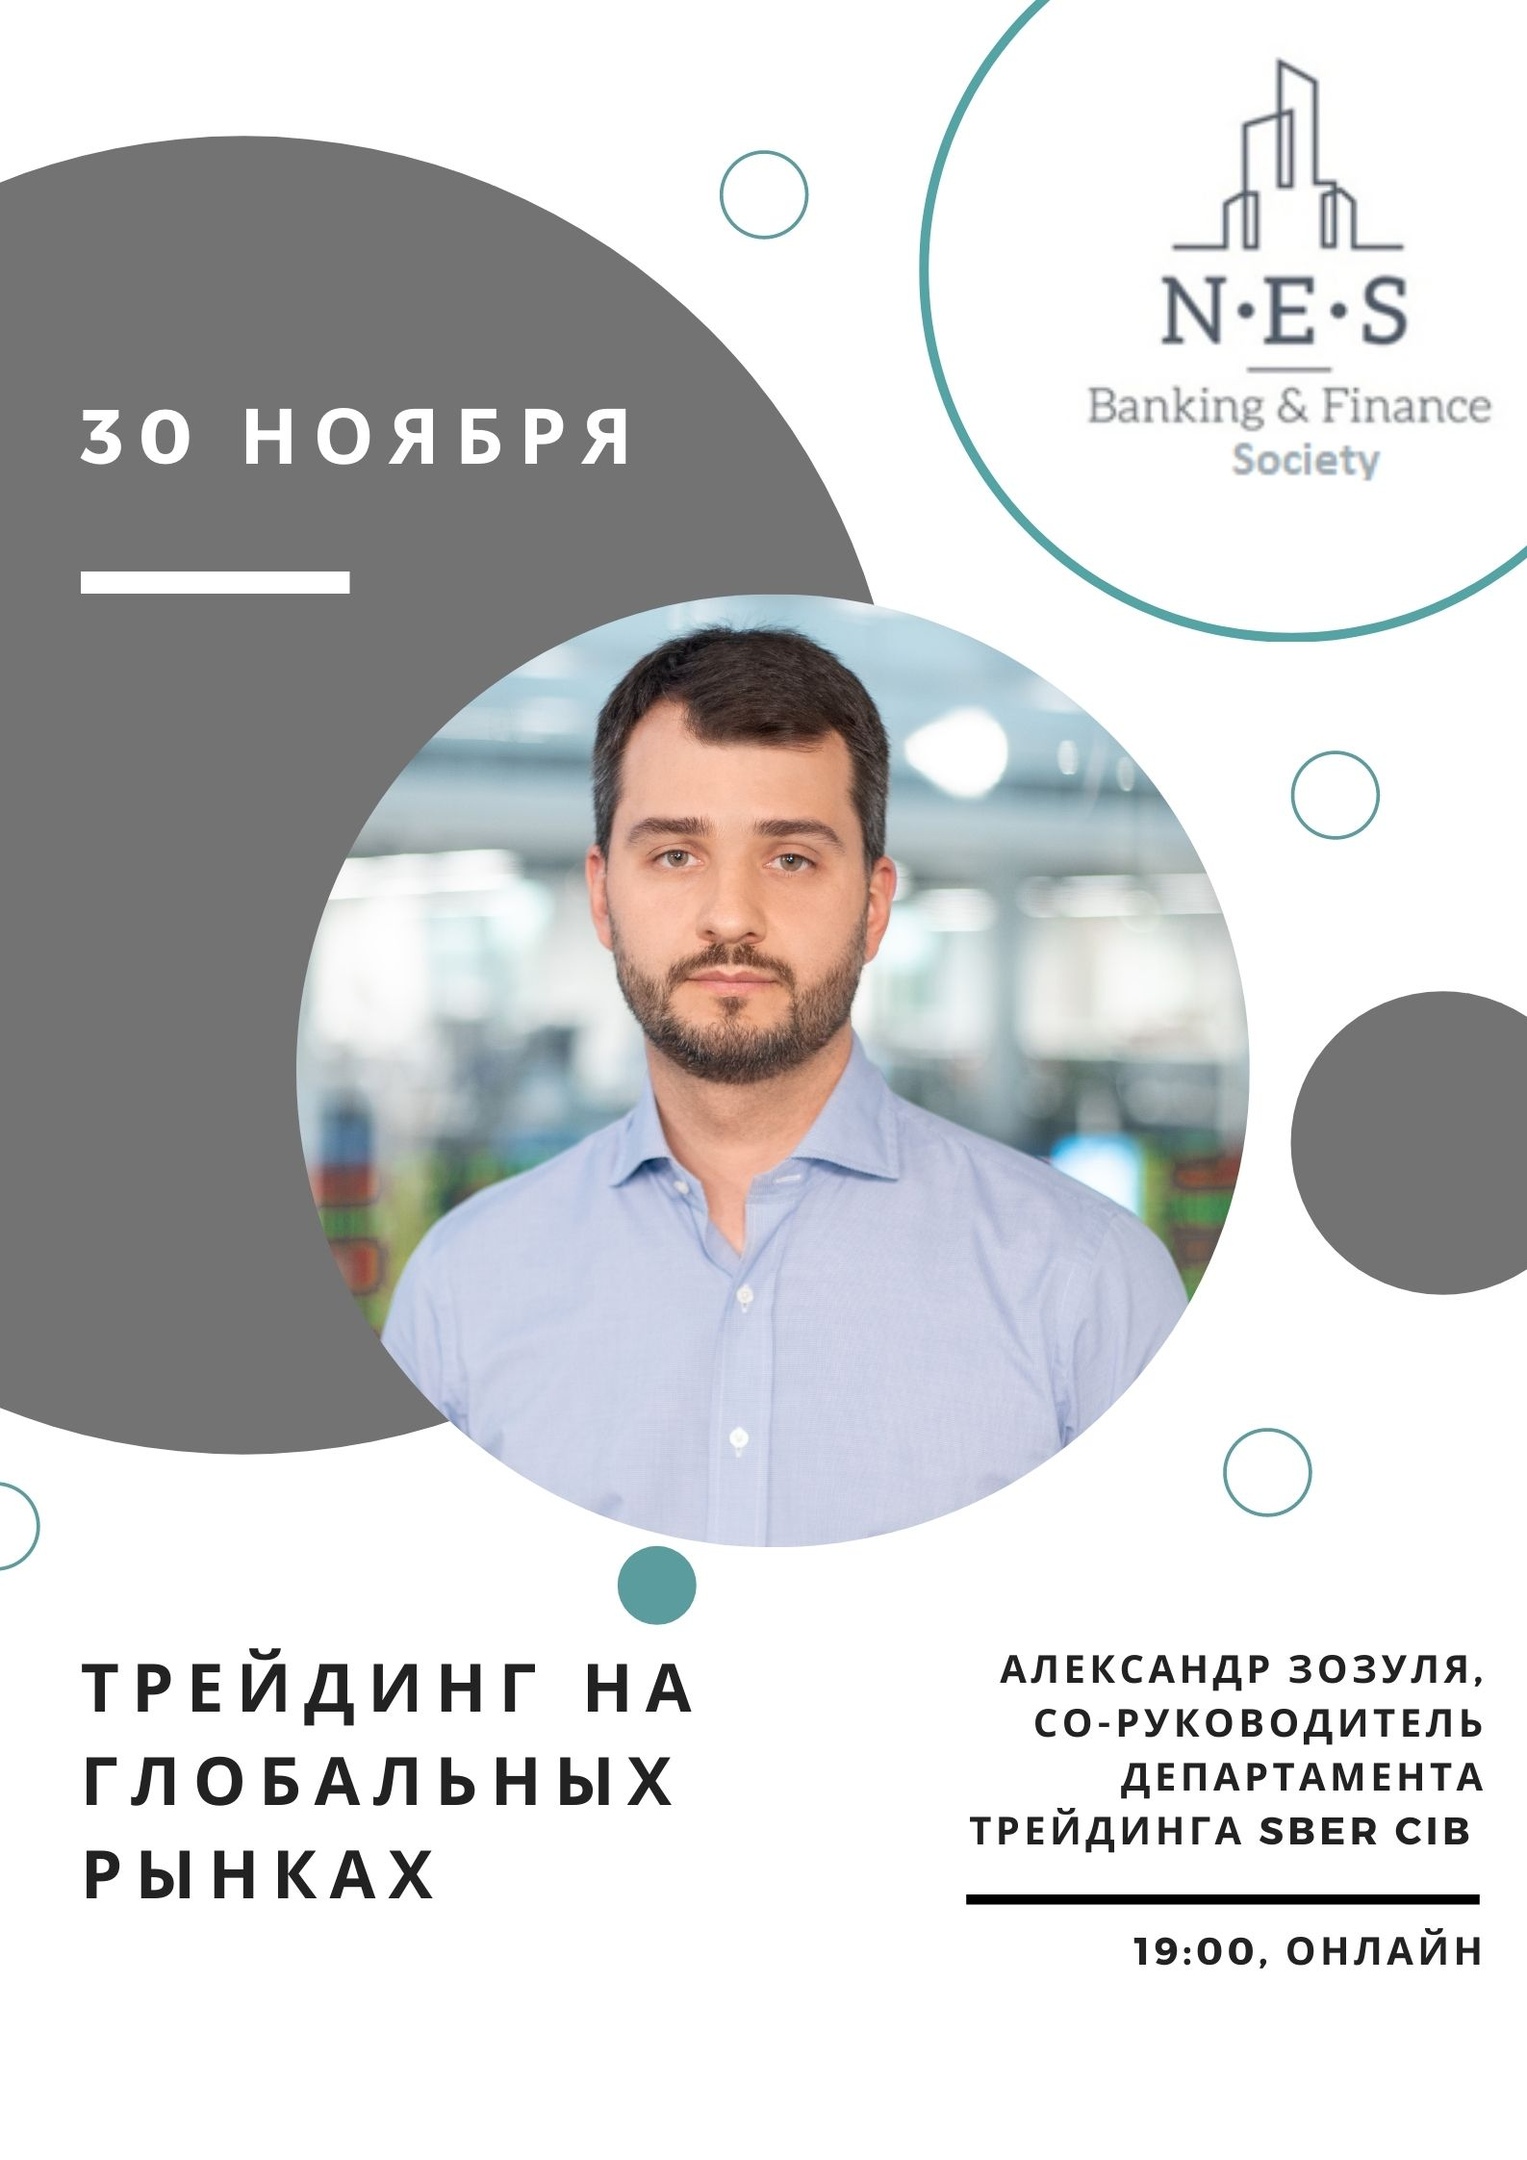 Alexander Zozulya – trading department co-head, Sber CIB